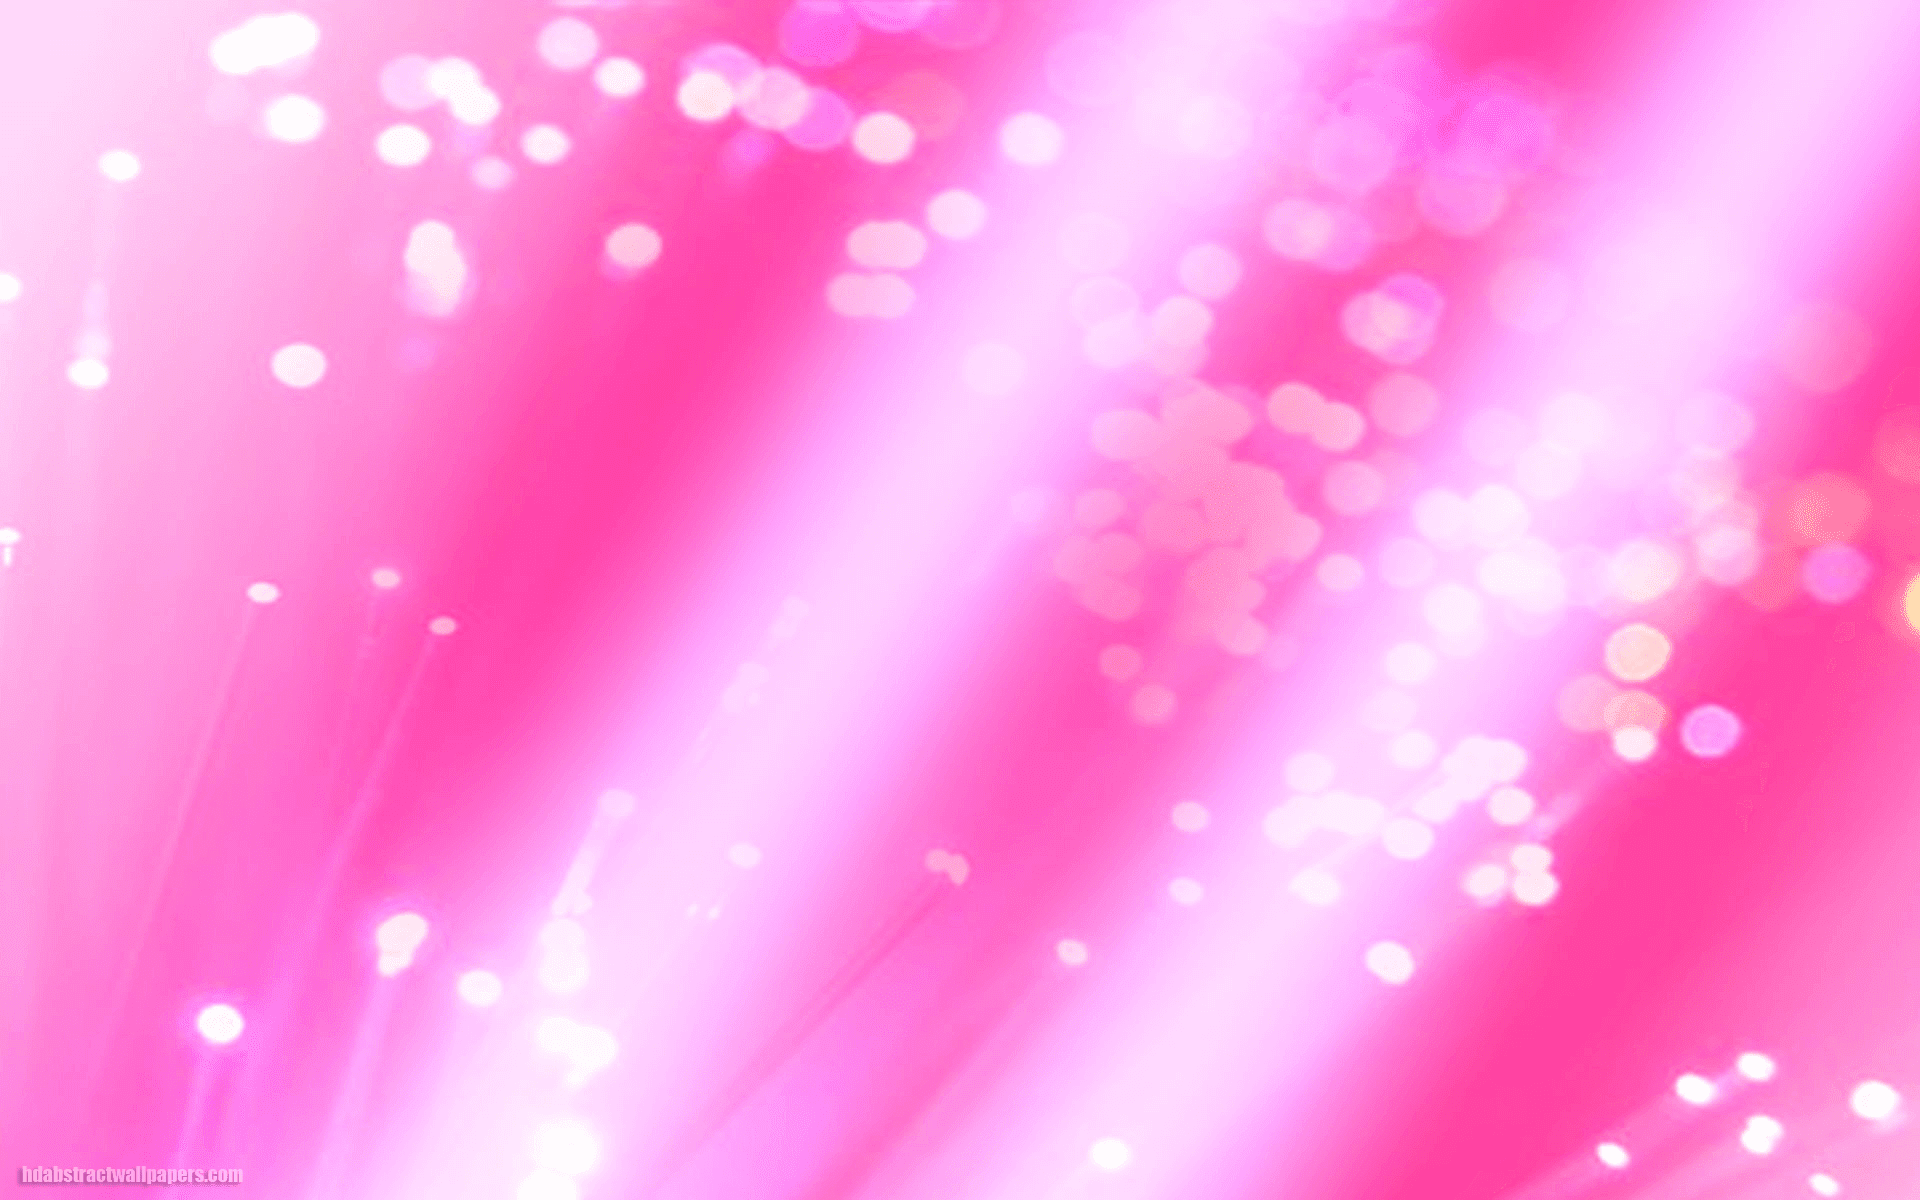 Pink abstract wallpaper with lights and circles. HD Abstract Wallpaper